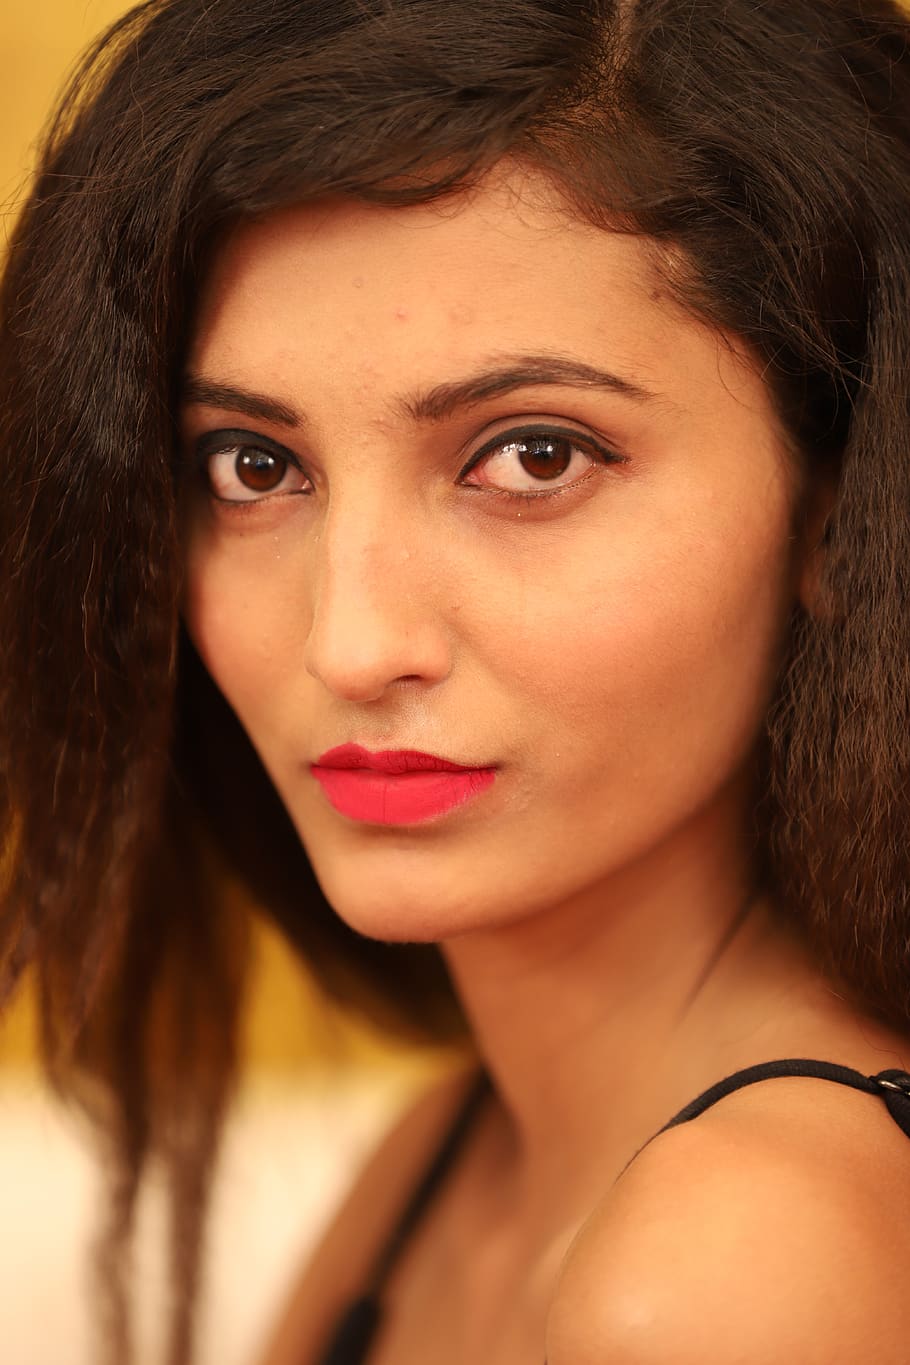 HD wallpaper: hot girl, face, eyes, indian model girl, lips, portrait,  beautiful woman | Wallpaper Flare